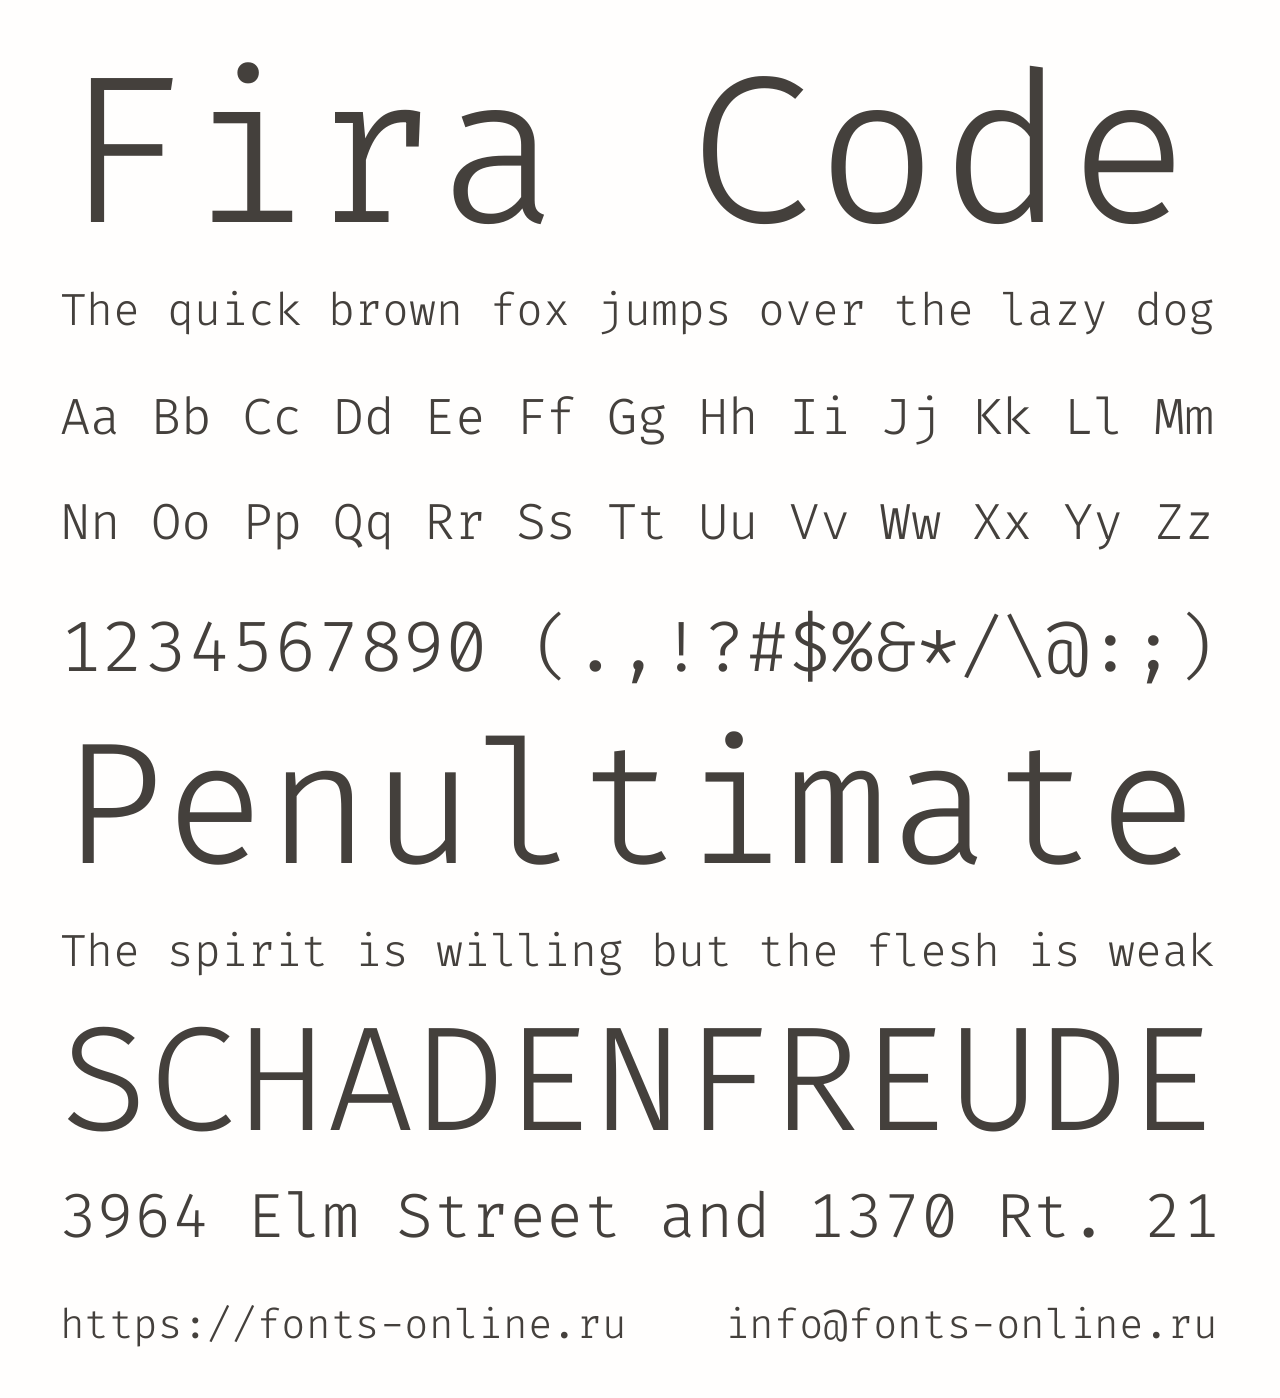 Шрифт Fira Code